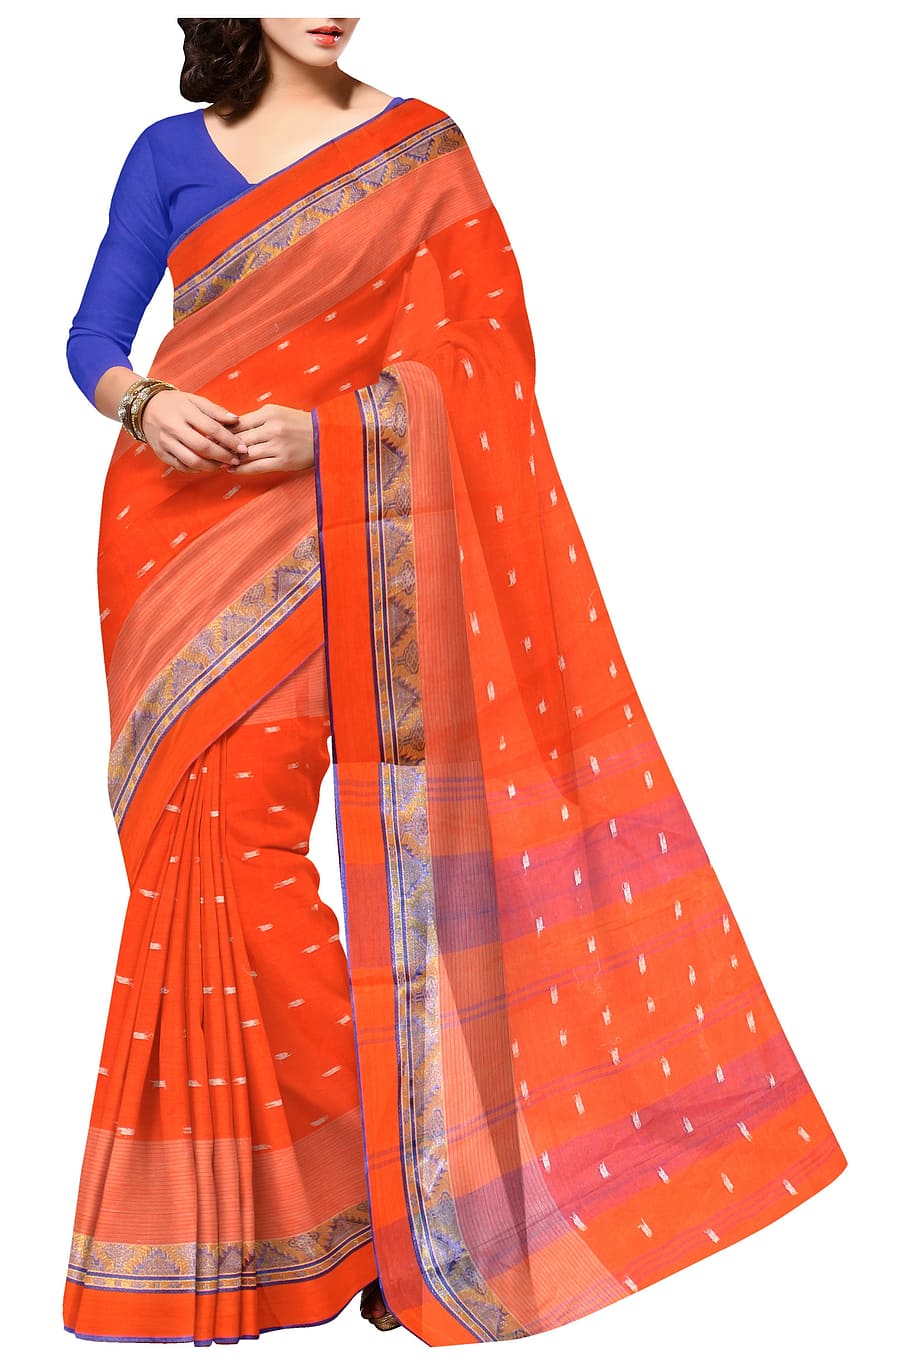 mujer, naranja, azul, vestido de sari, sari, indio, étnico, ropa, moda, seda